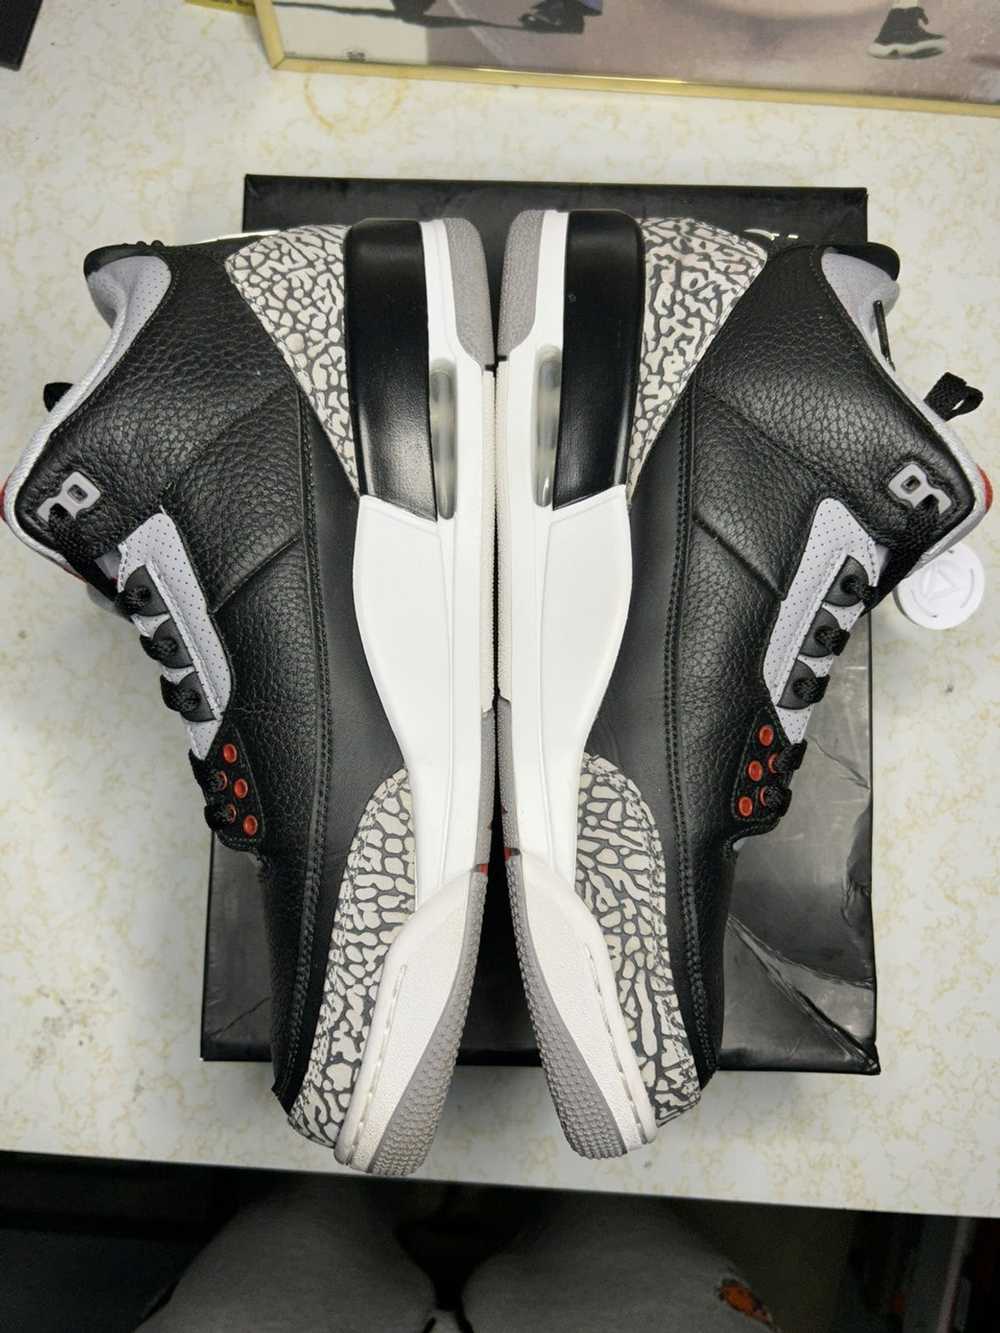 Jordan Brand Jordan Retro 3 “Black Cement” - image 2